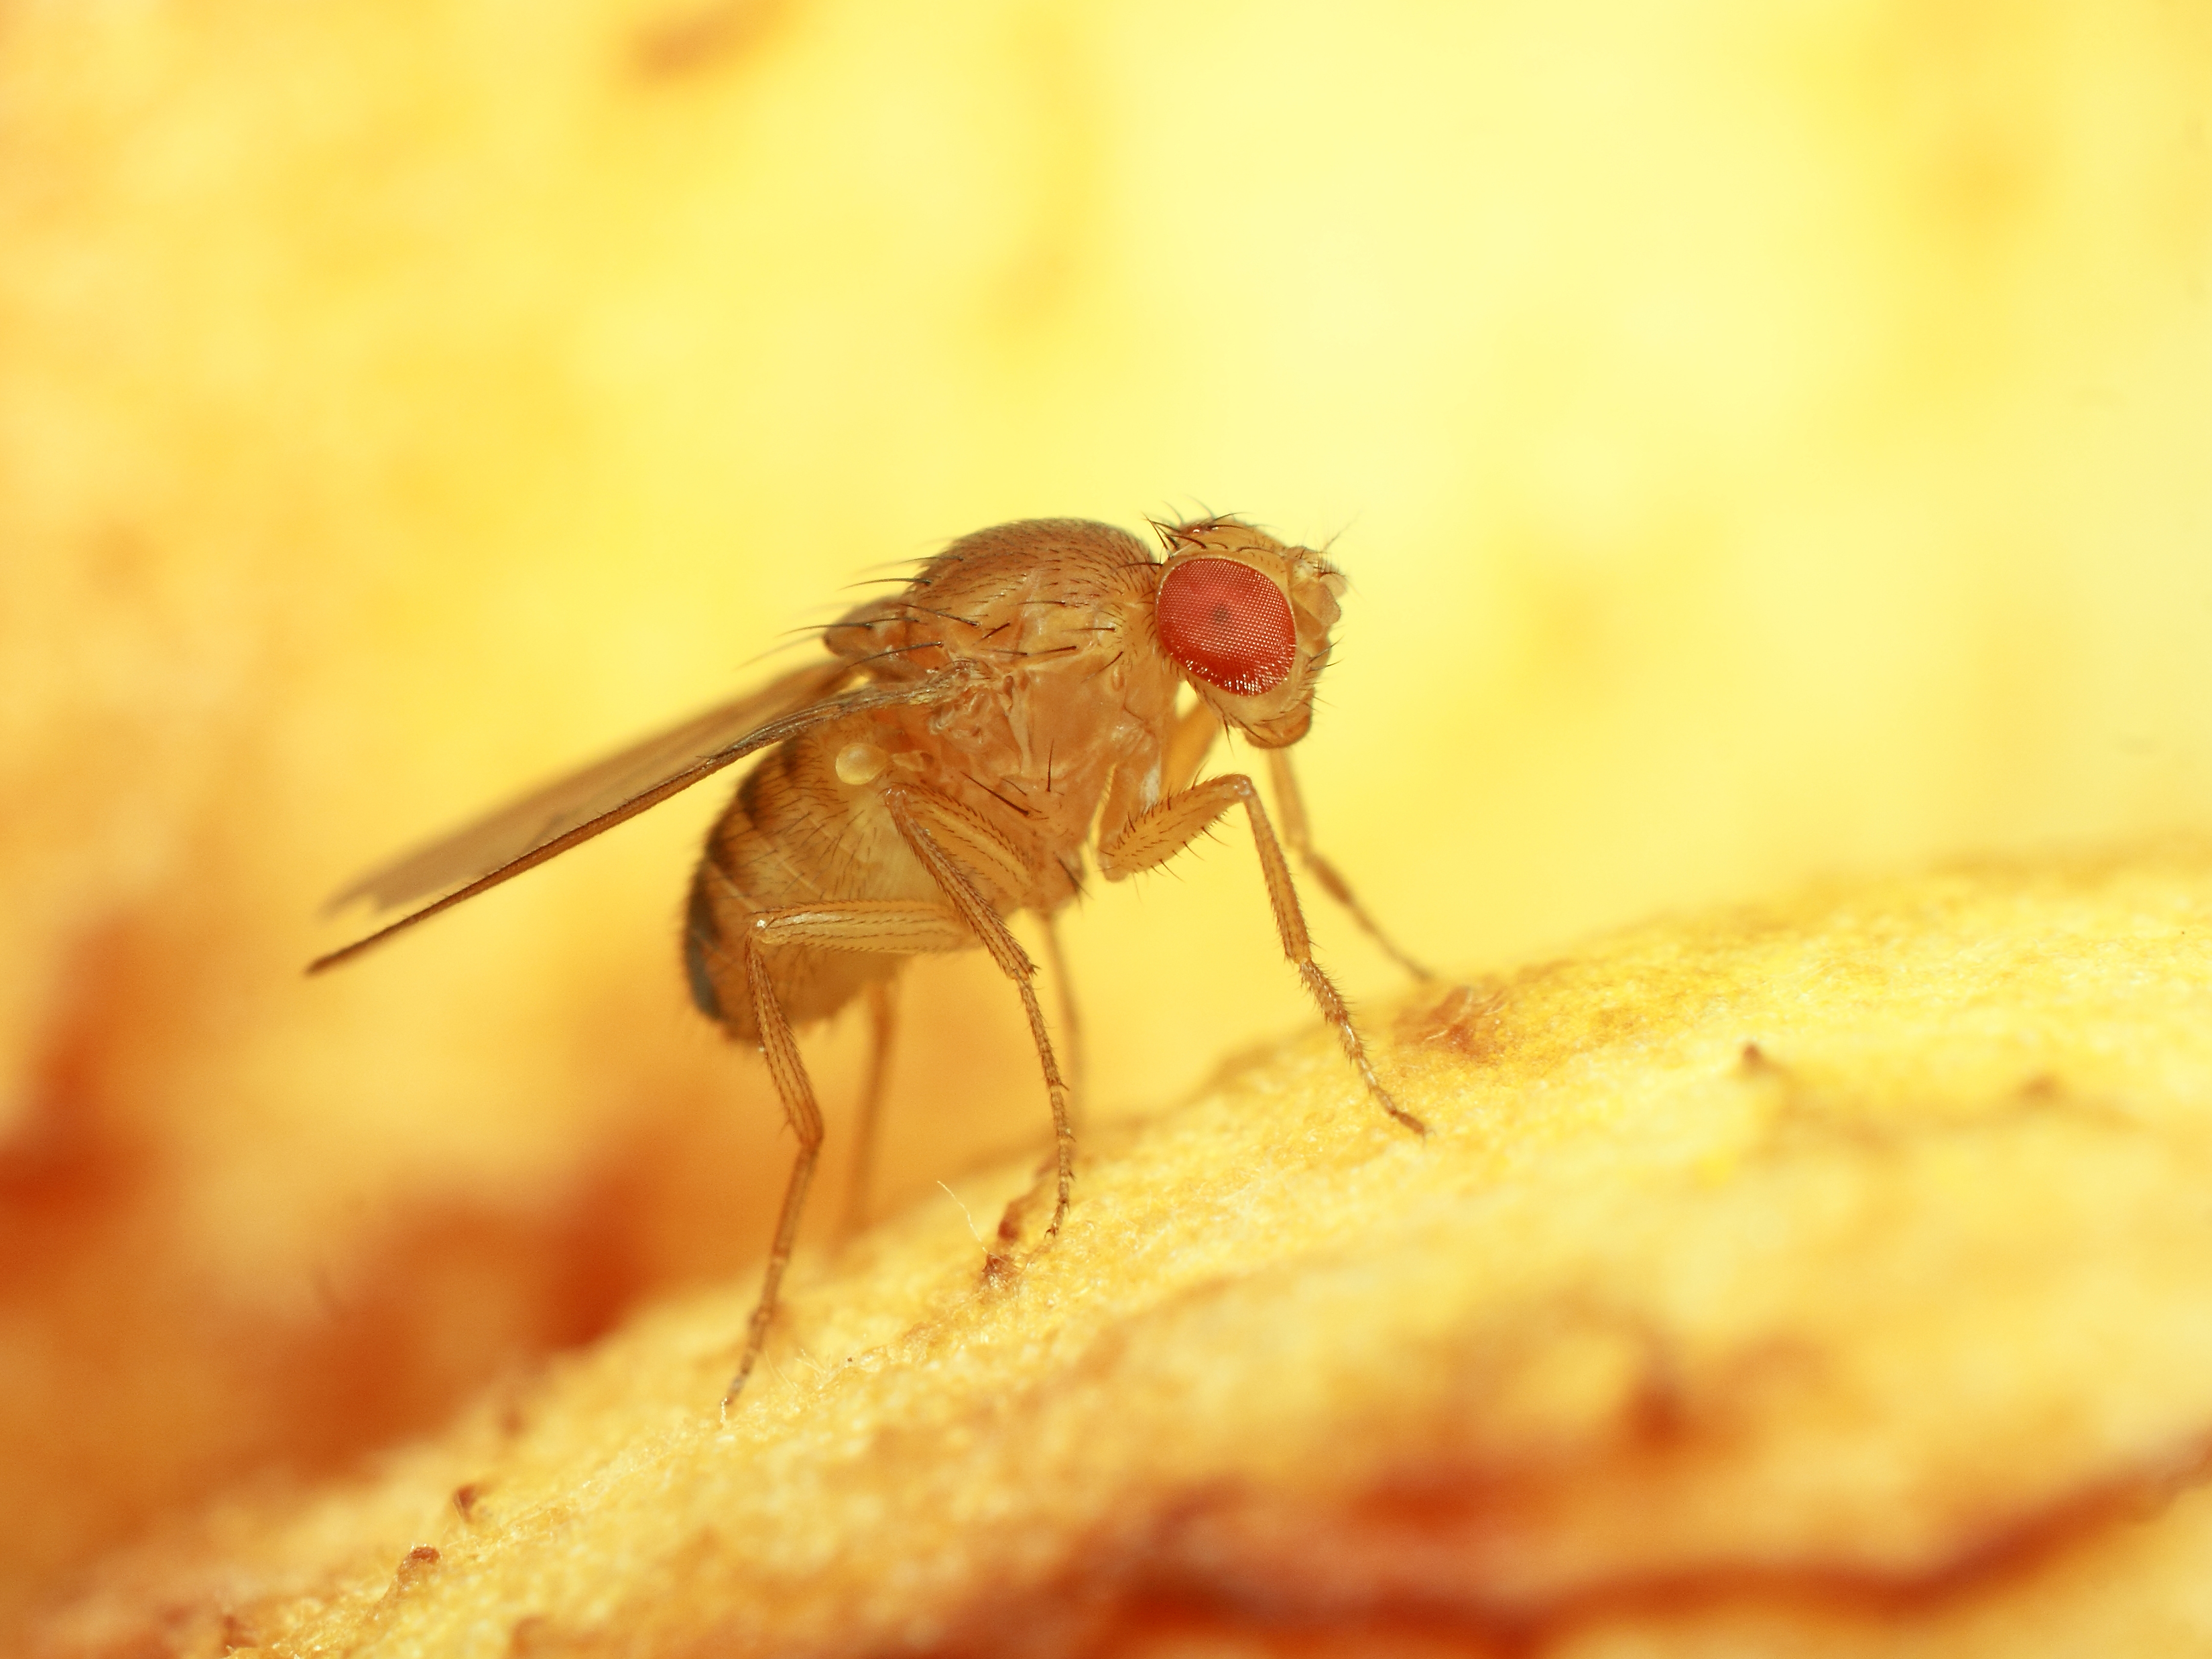 Scientists Gain New Insight into Neurodegenerative Diseases Using Fruit Flies